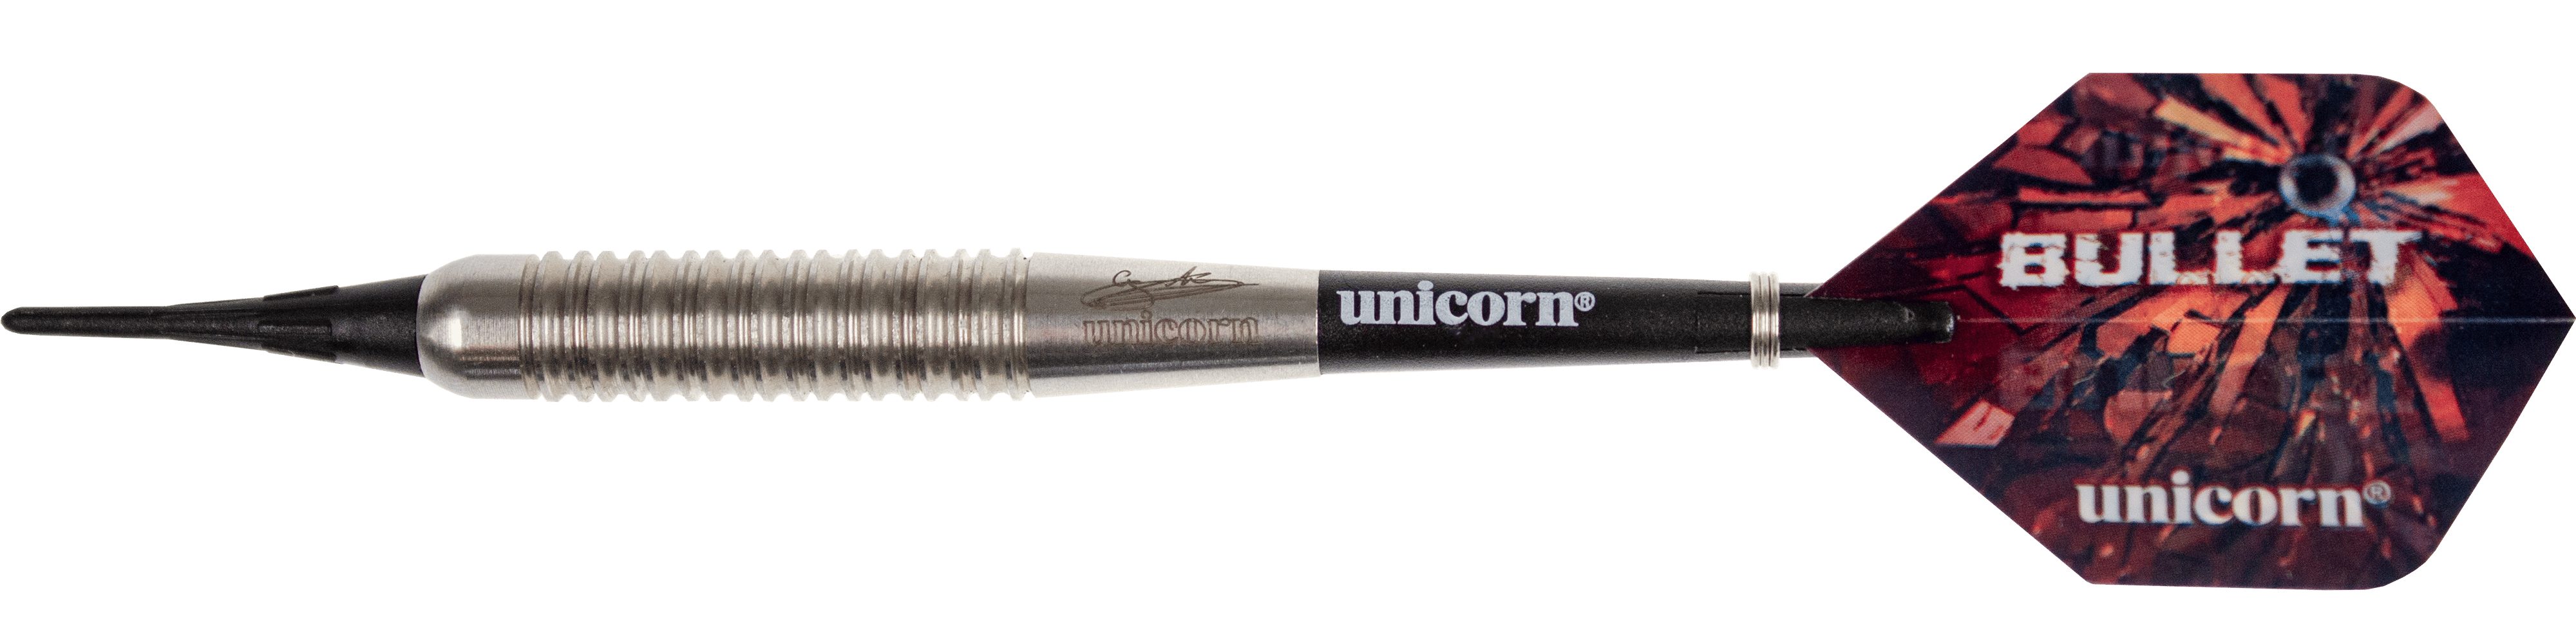 Unicorn Bullet Gary Anderson soft darts